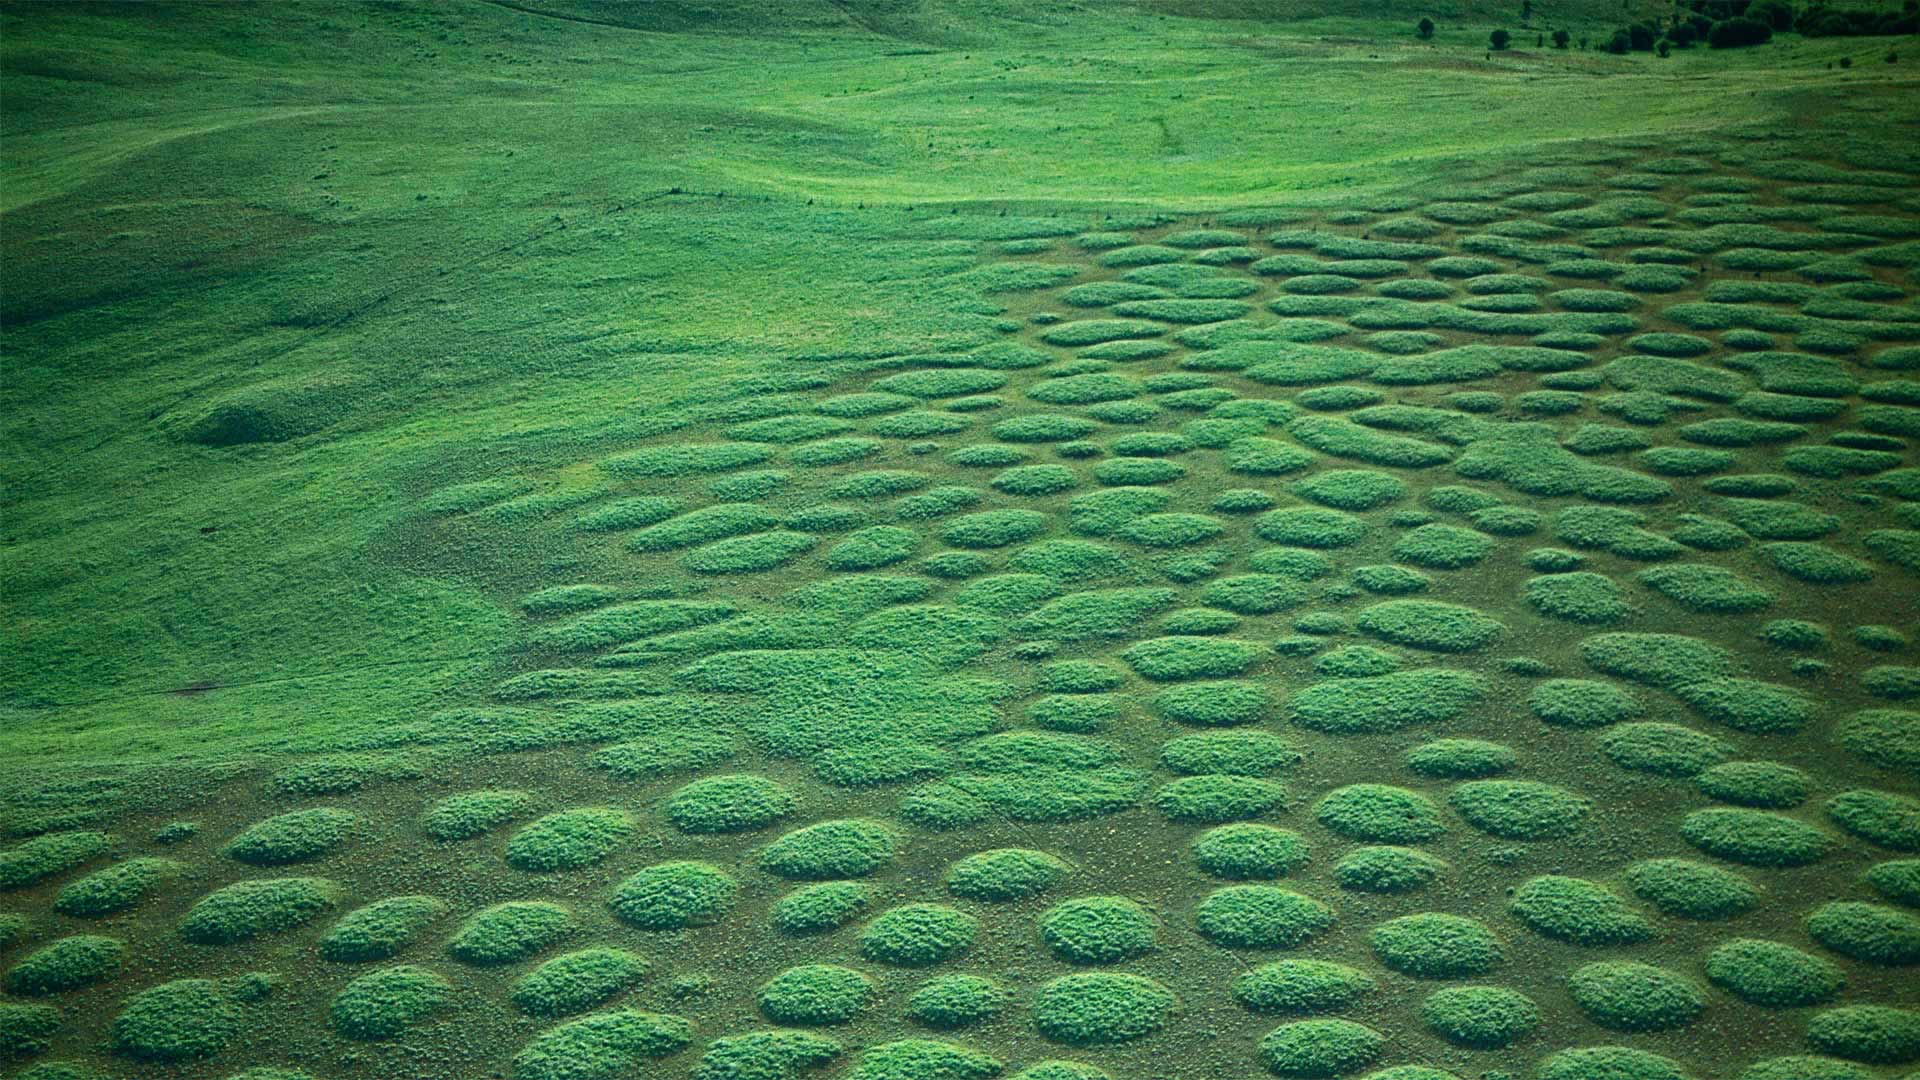 Mysterious prairie mounds abound